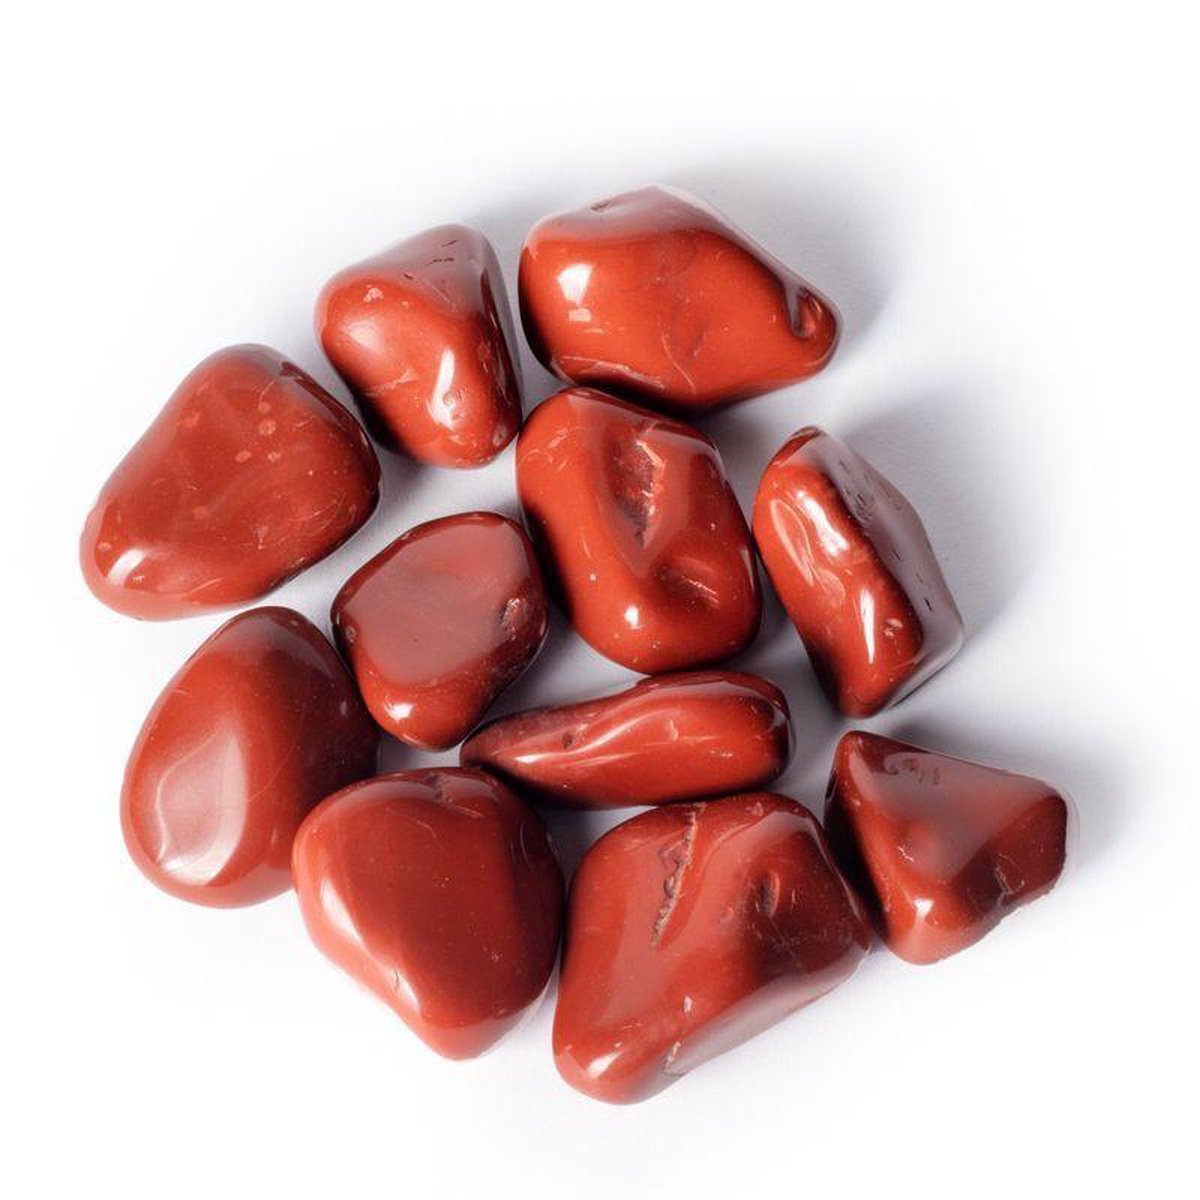 Rode Jaspis trommelsteen, 100 gram knuffelstenen in linnen zakje. Gratis verzending!